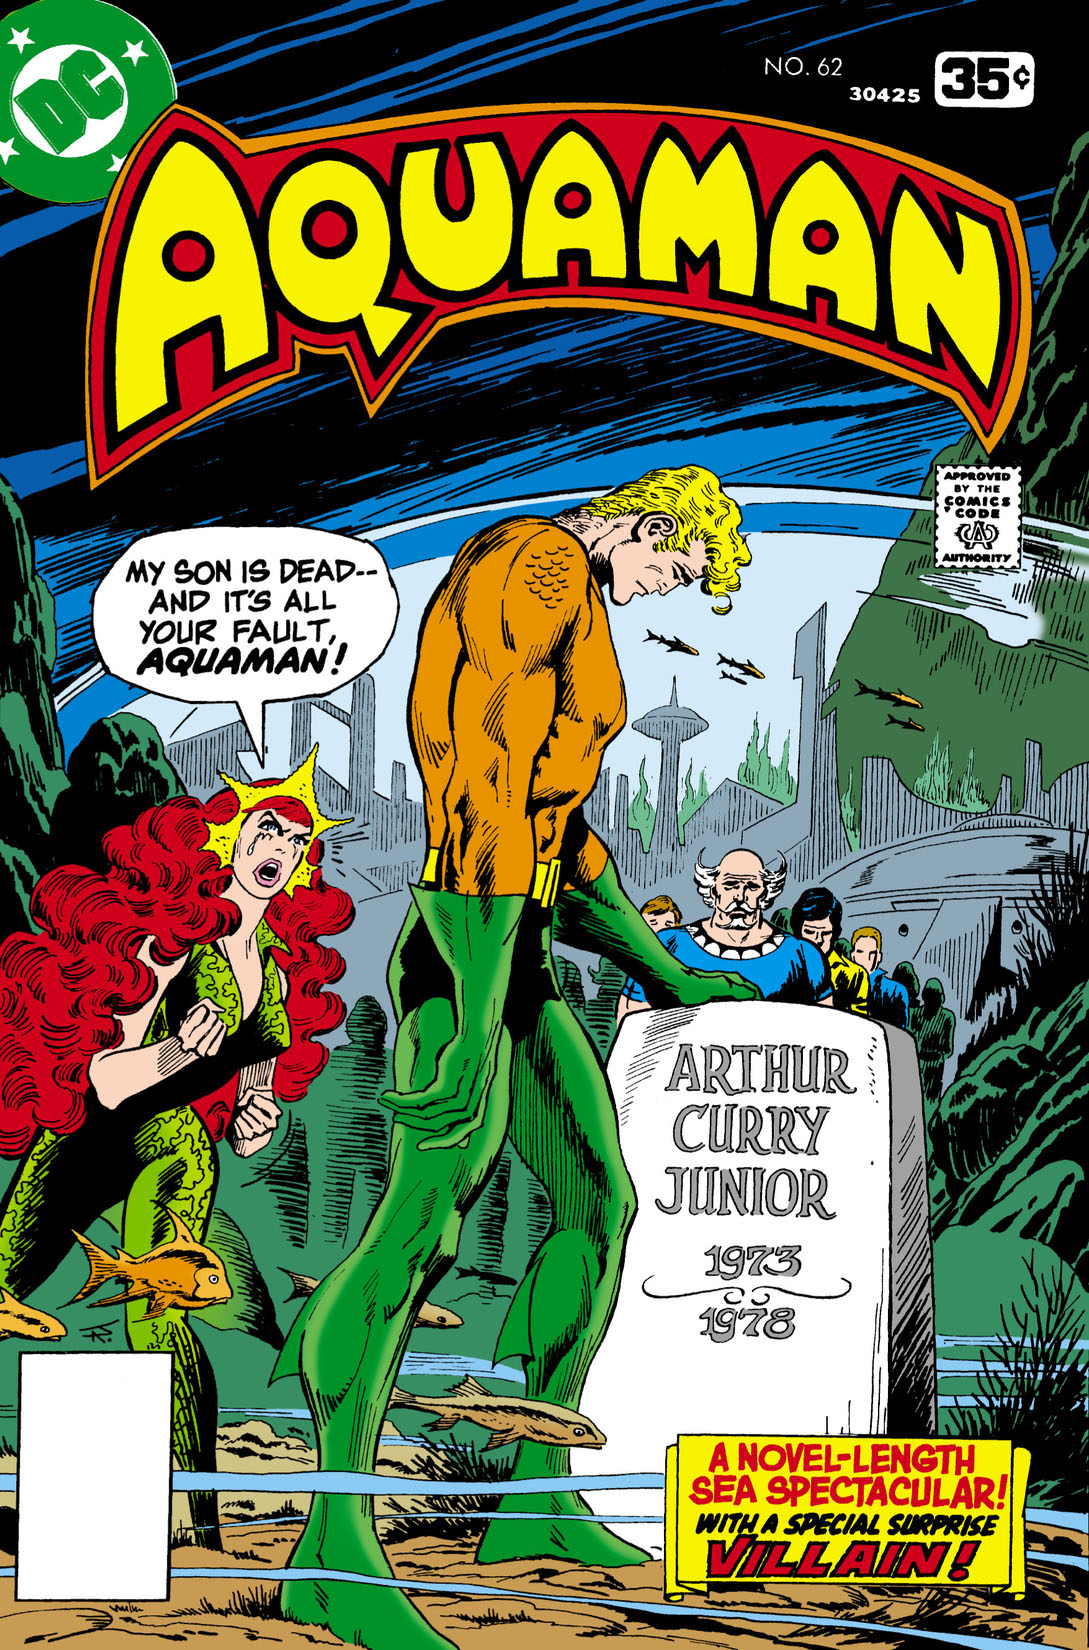 Aquaman (1962-) #62 preview images